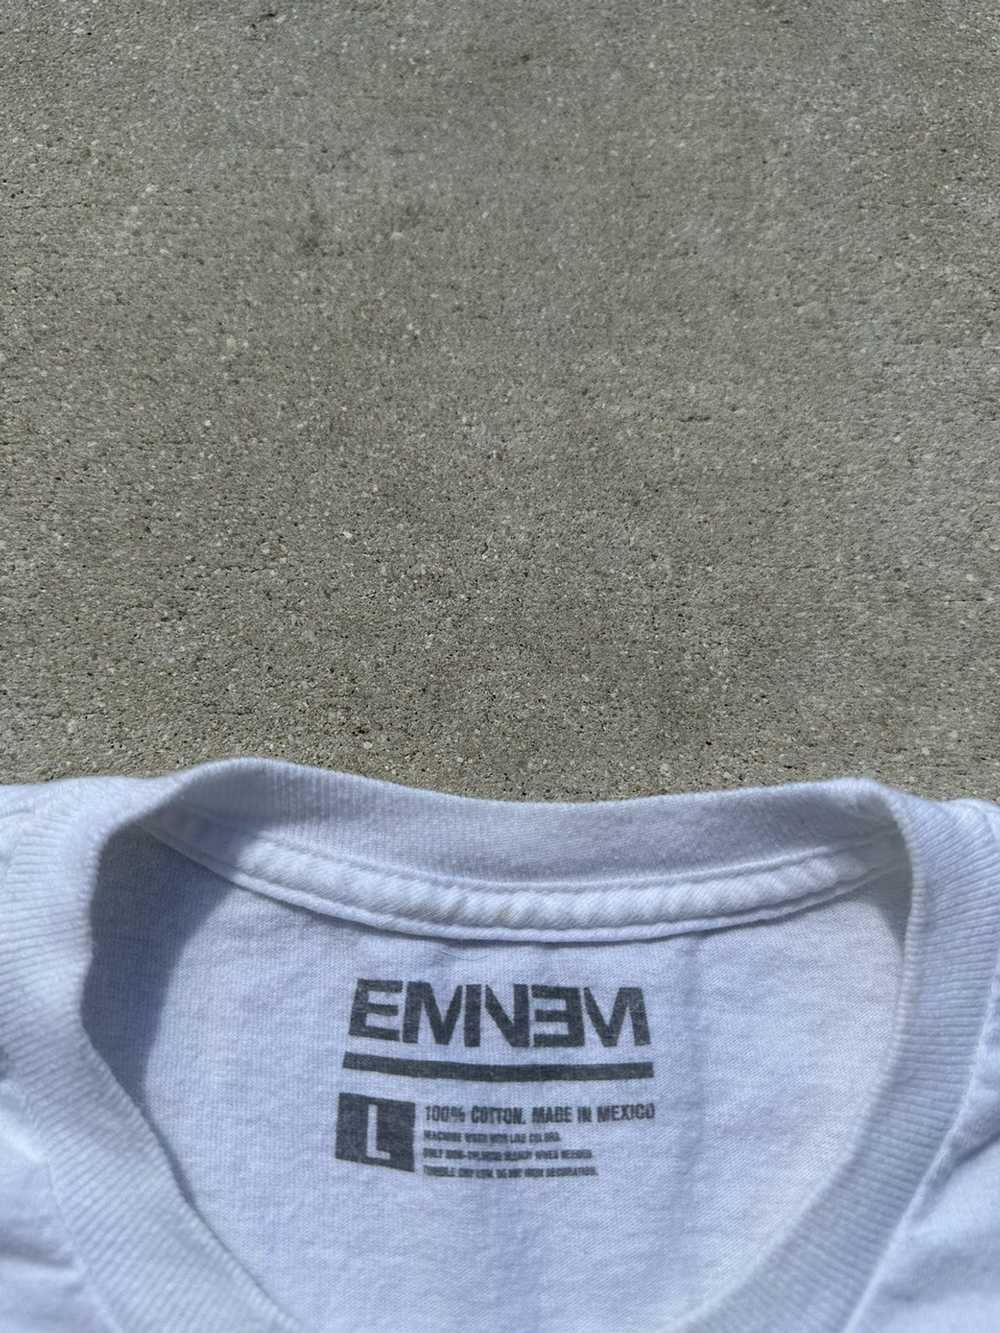 Eminem 🎧 Embroidered Stan Eminem Tee 🎧 - image 3